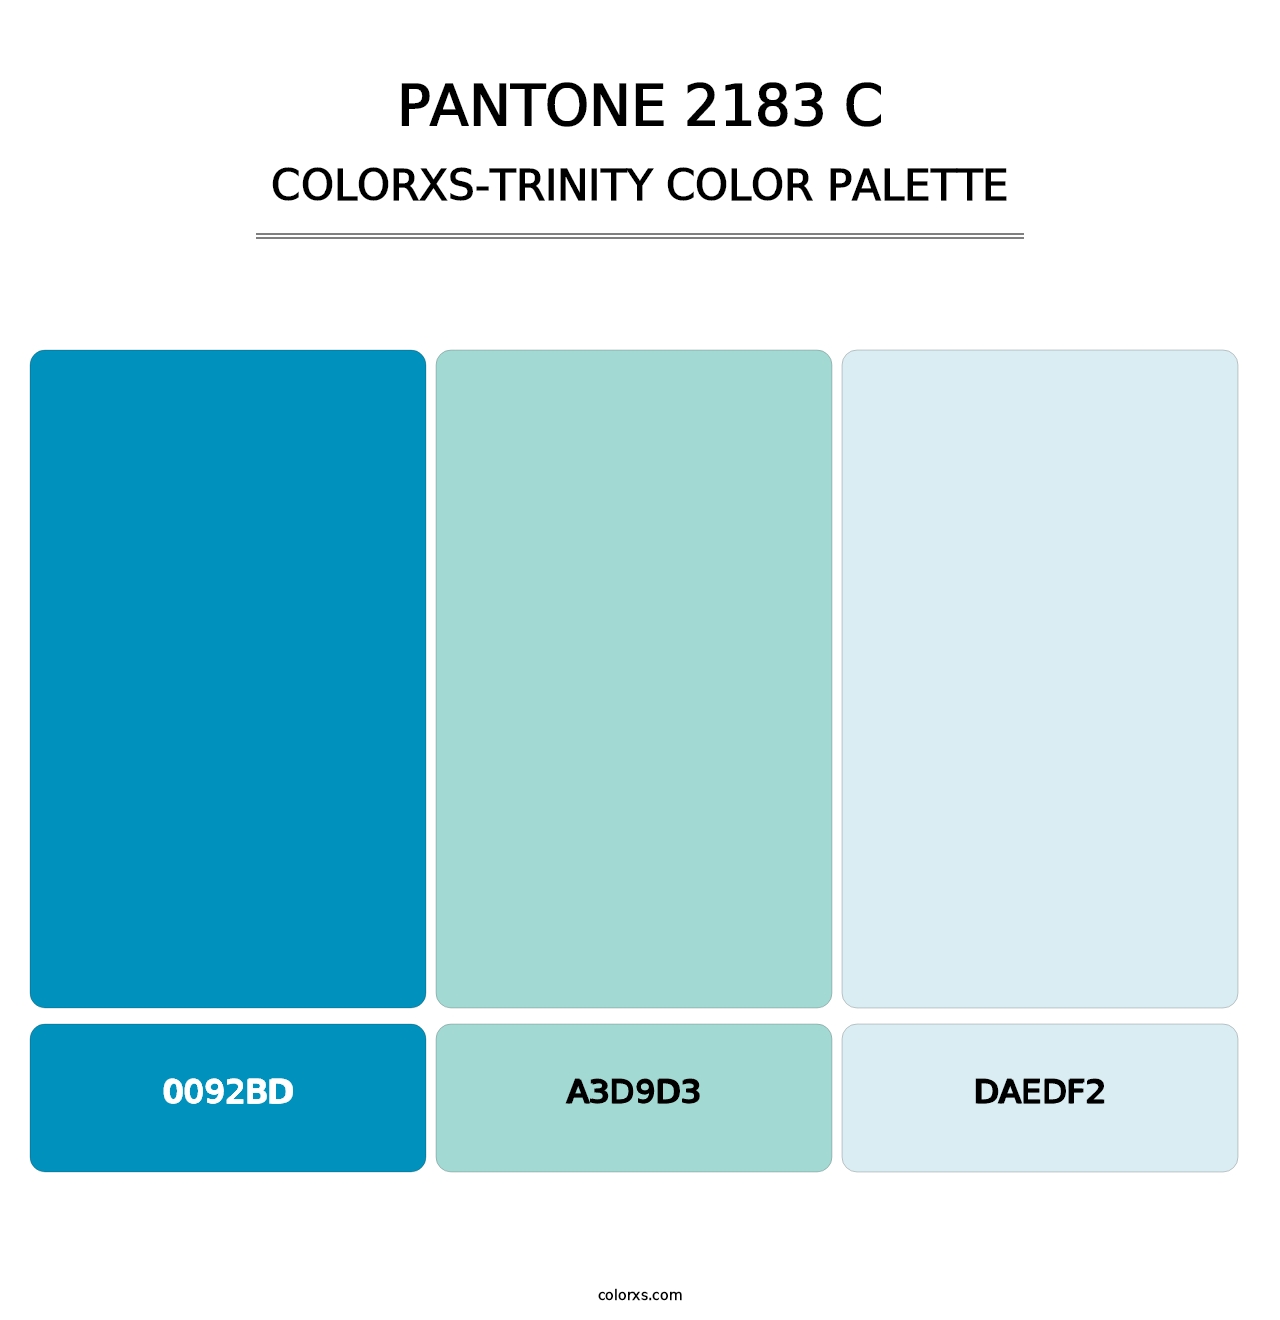 PANTONE 2183 C - Colorxs Trinity Palette